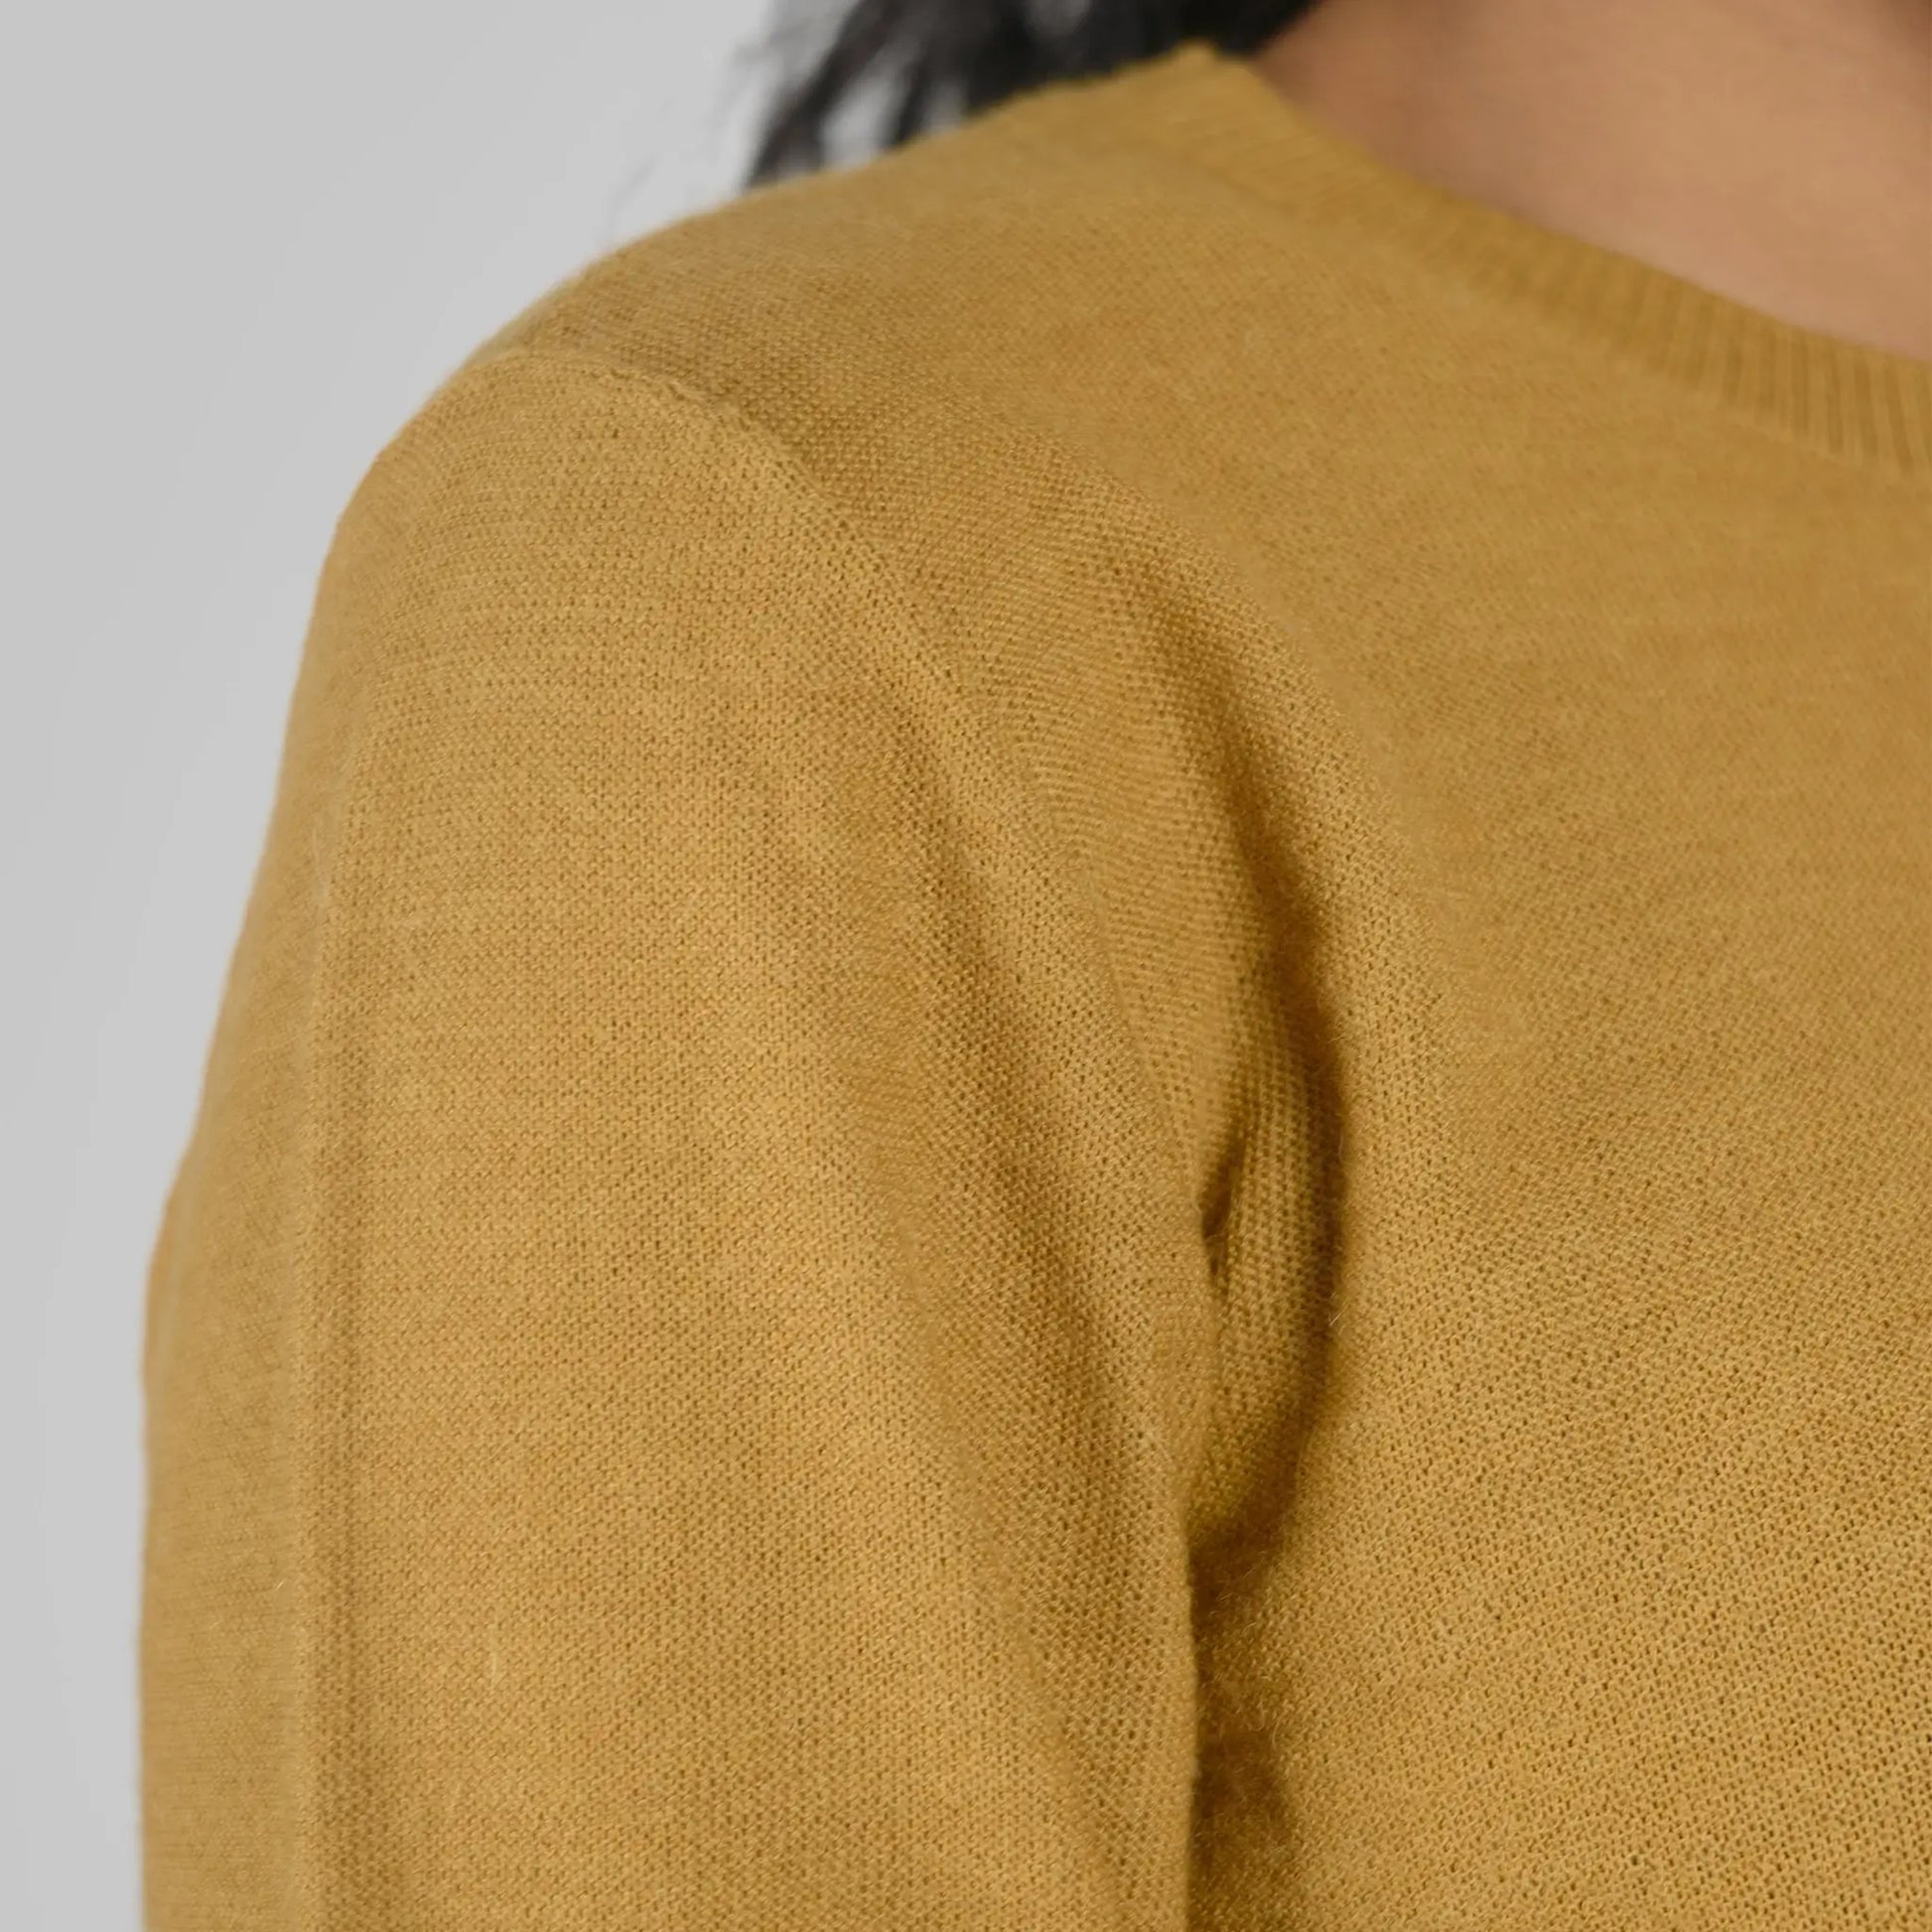 Women's Alpaca Wool Sweater color mustard yellow